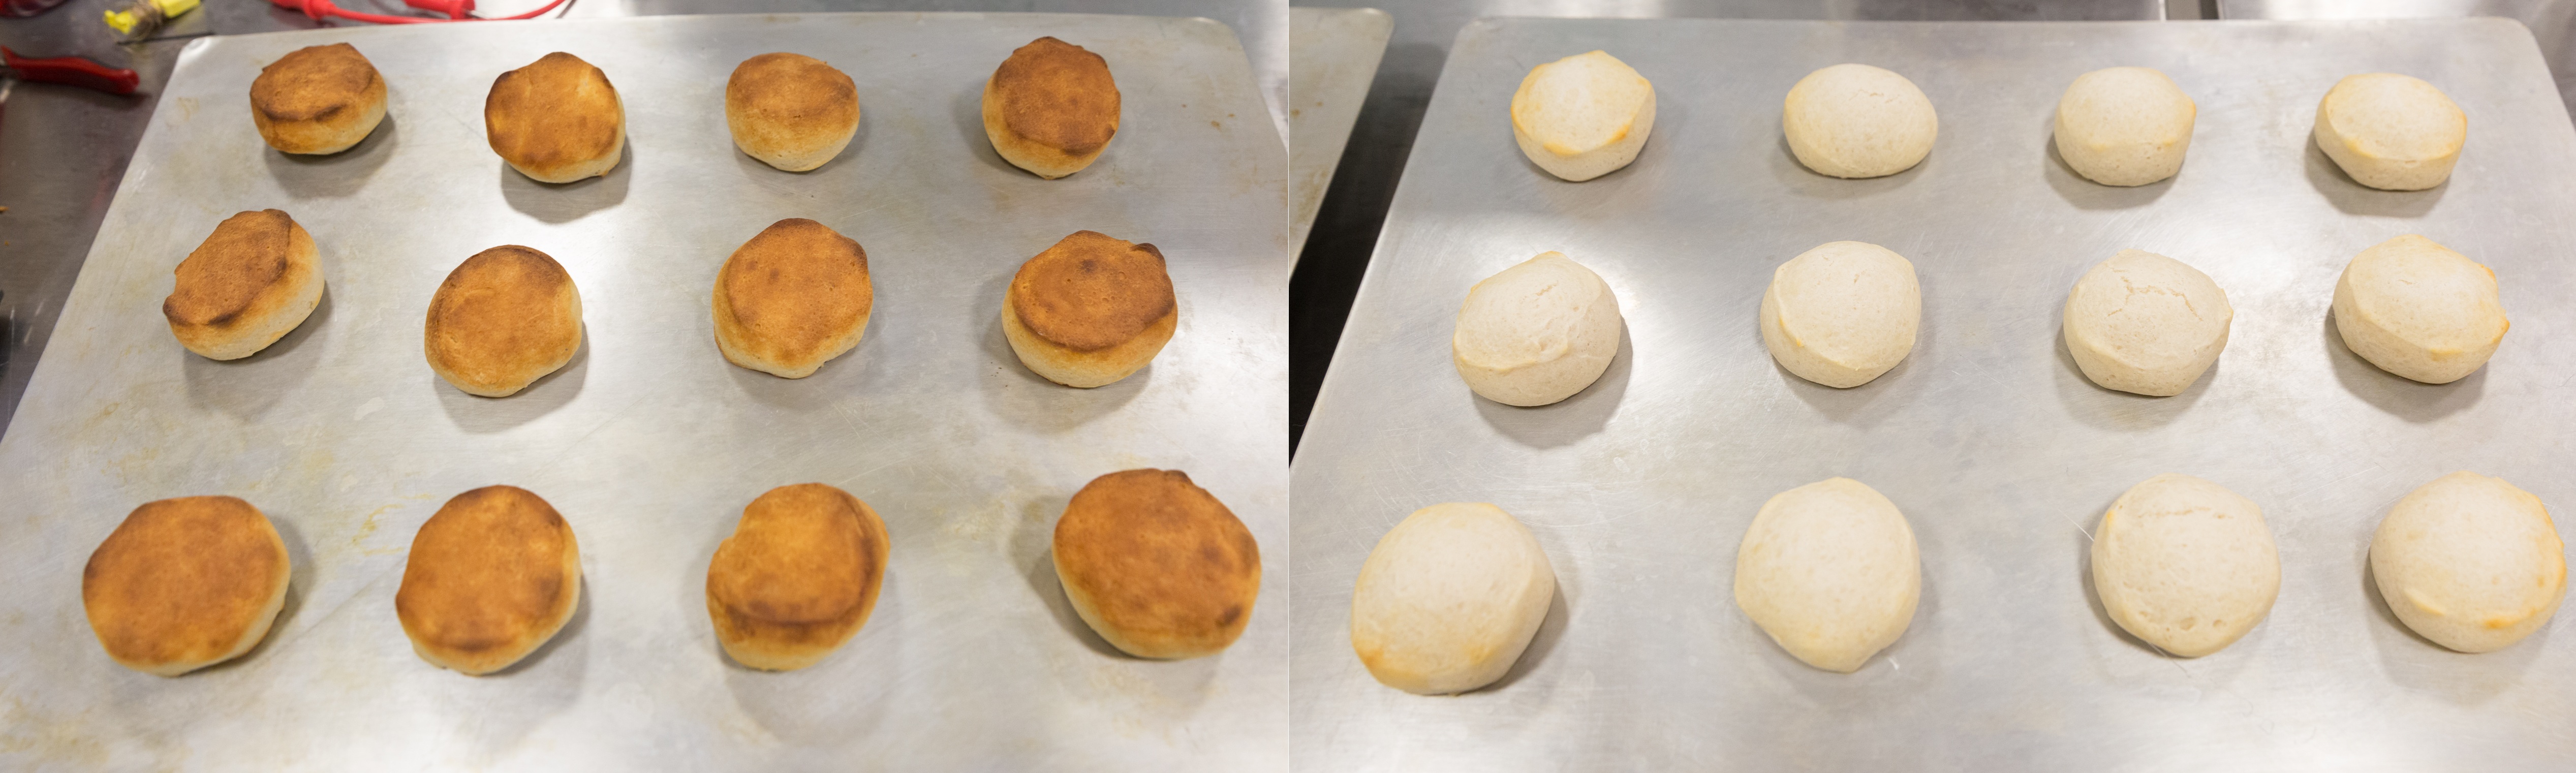 ge-phs920-traditional-bake-double-rack-re-test-combo.jpg